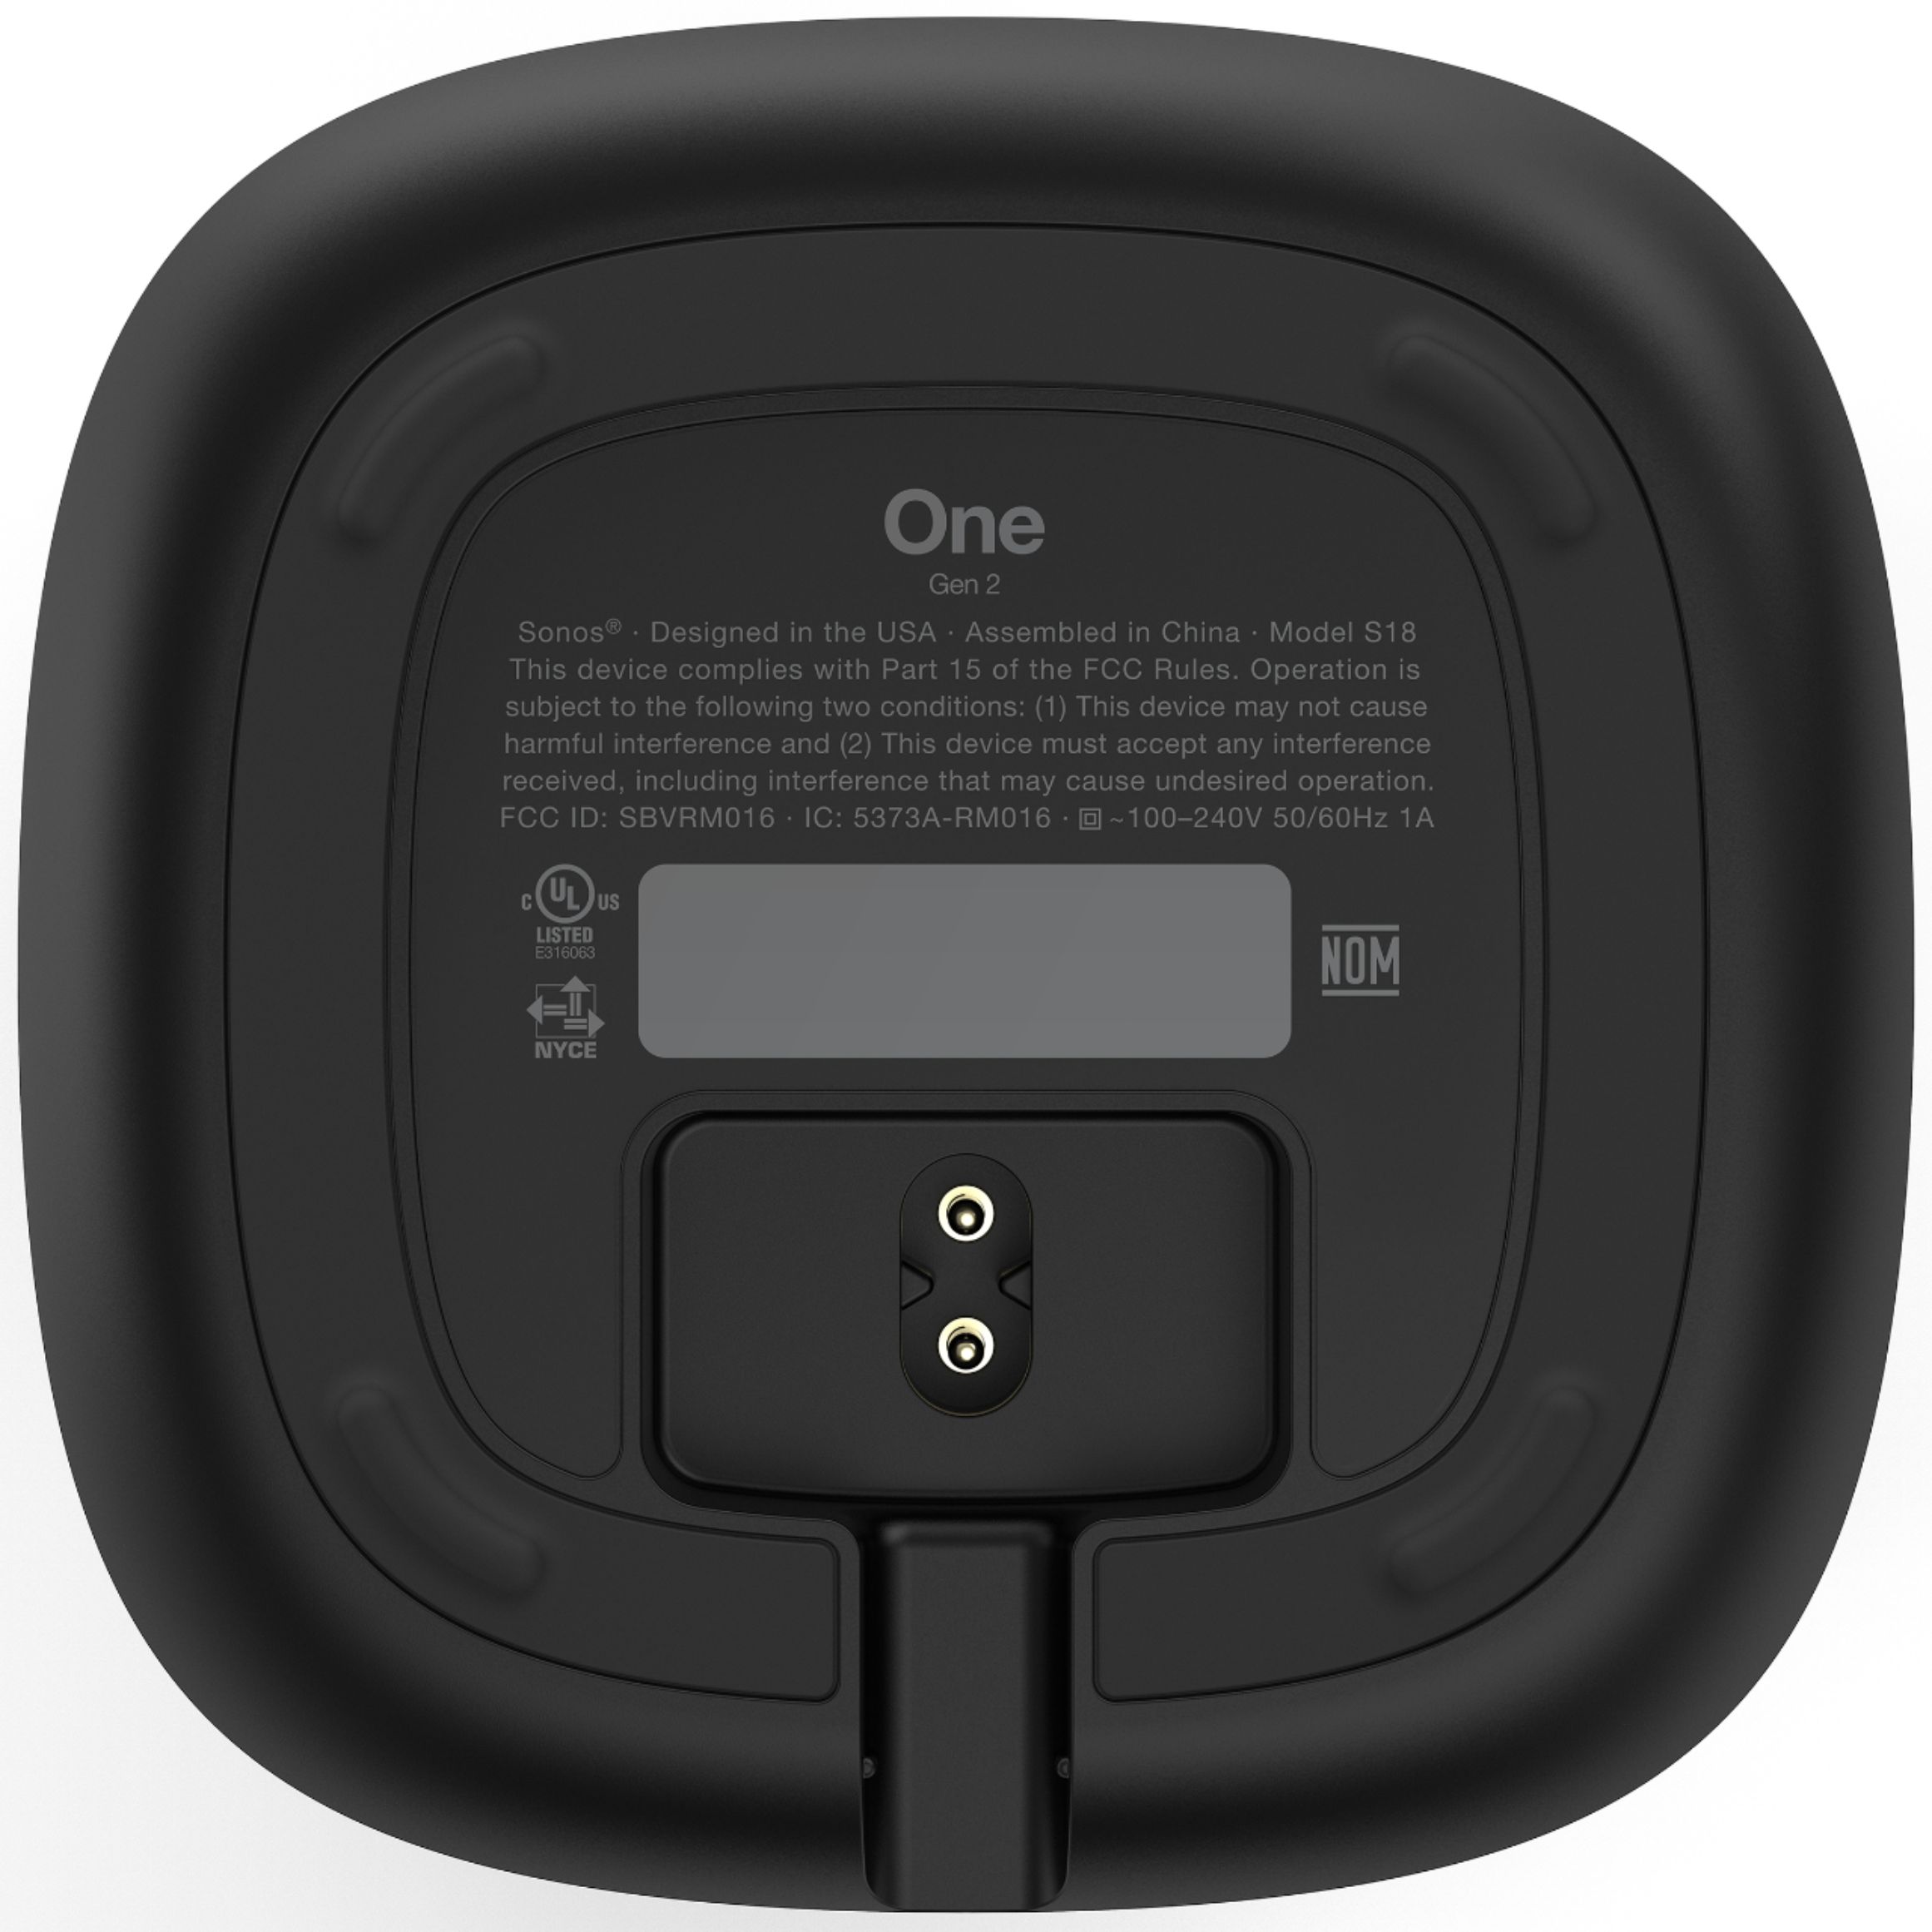 straf Reaktor saltet Sonos One (Gen 2) Smart Speaker with Voice Control built-in Black  ONEG2US1BLK - Best Buy